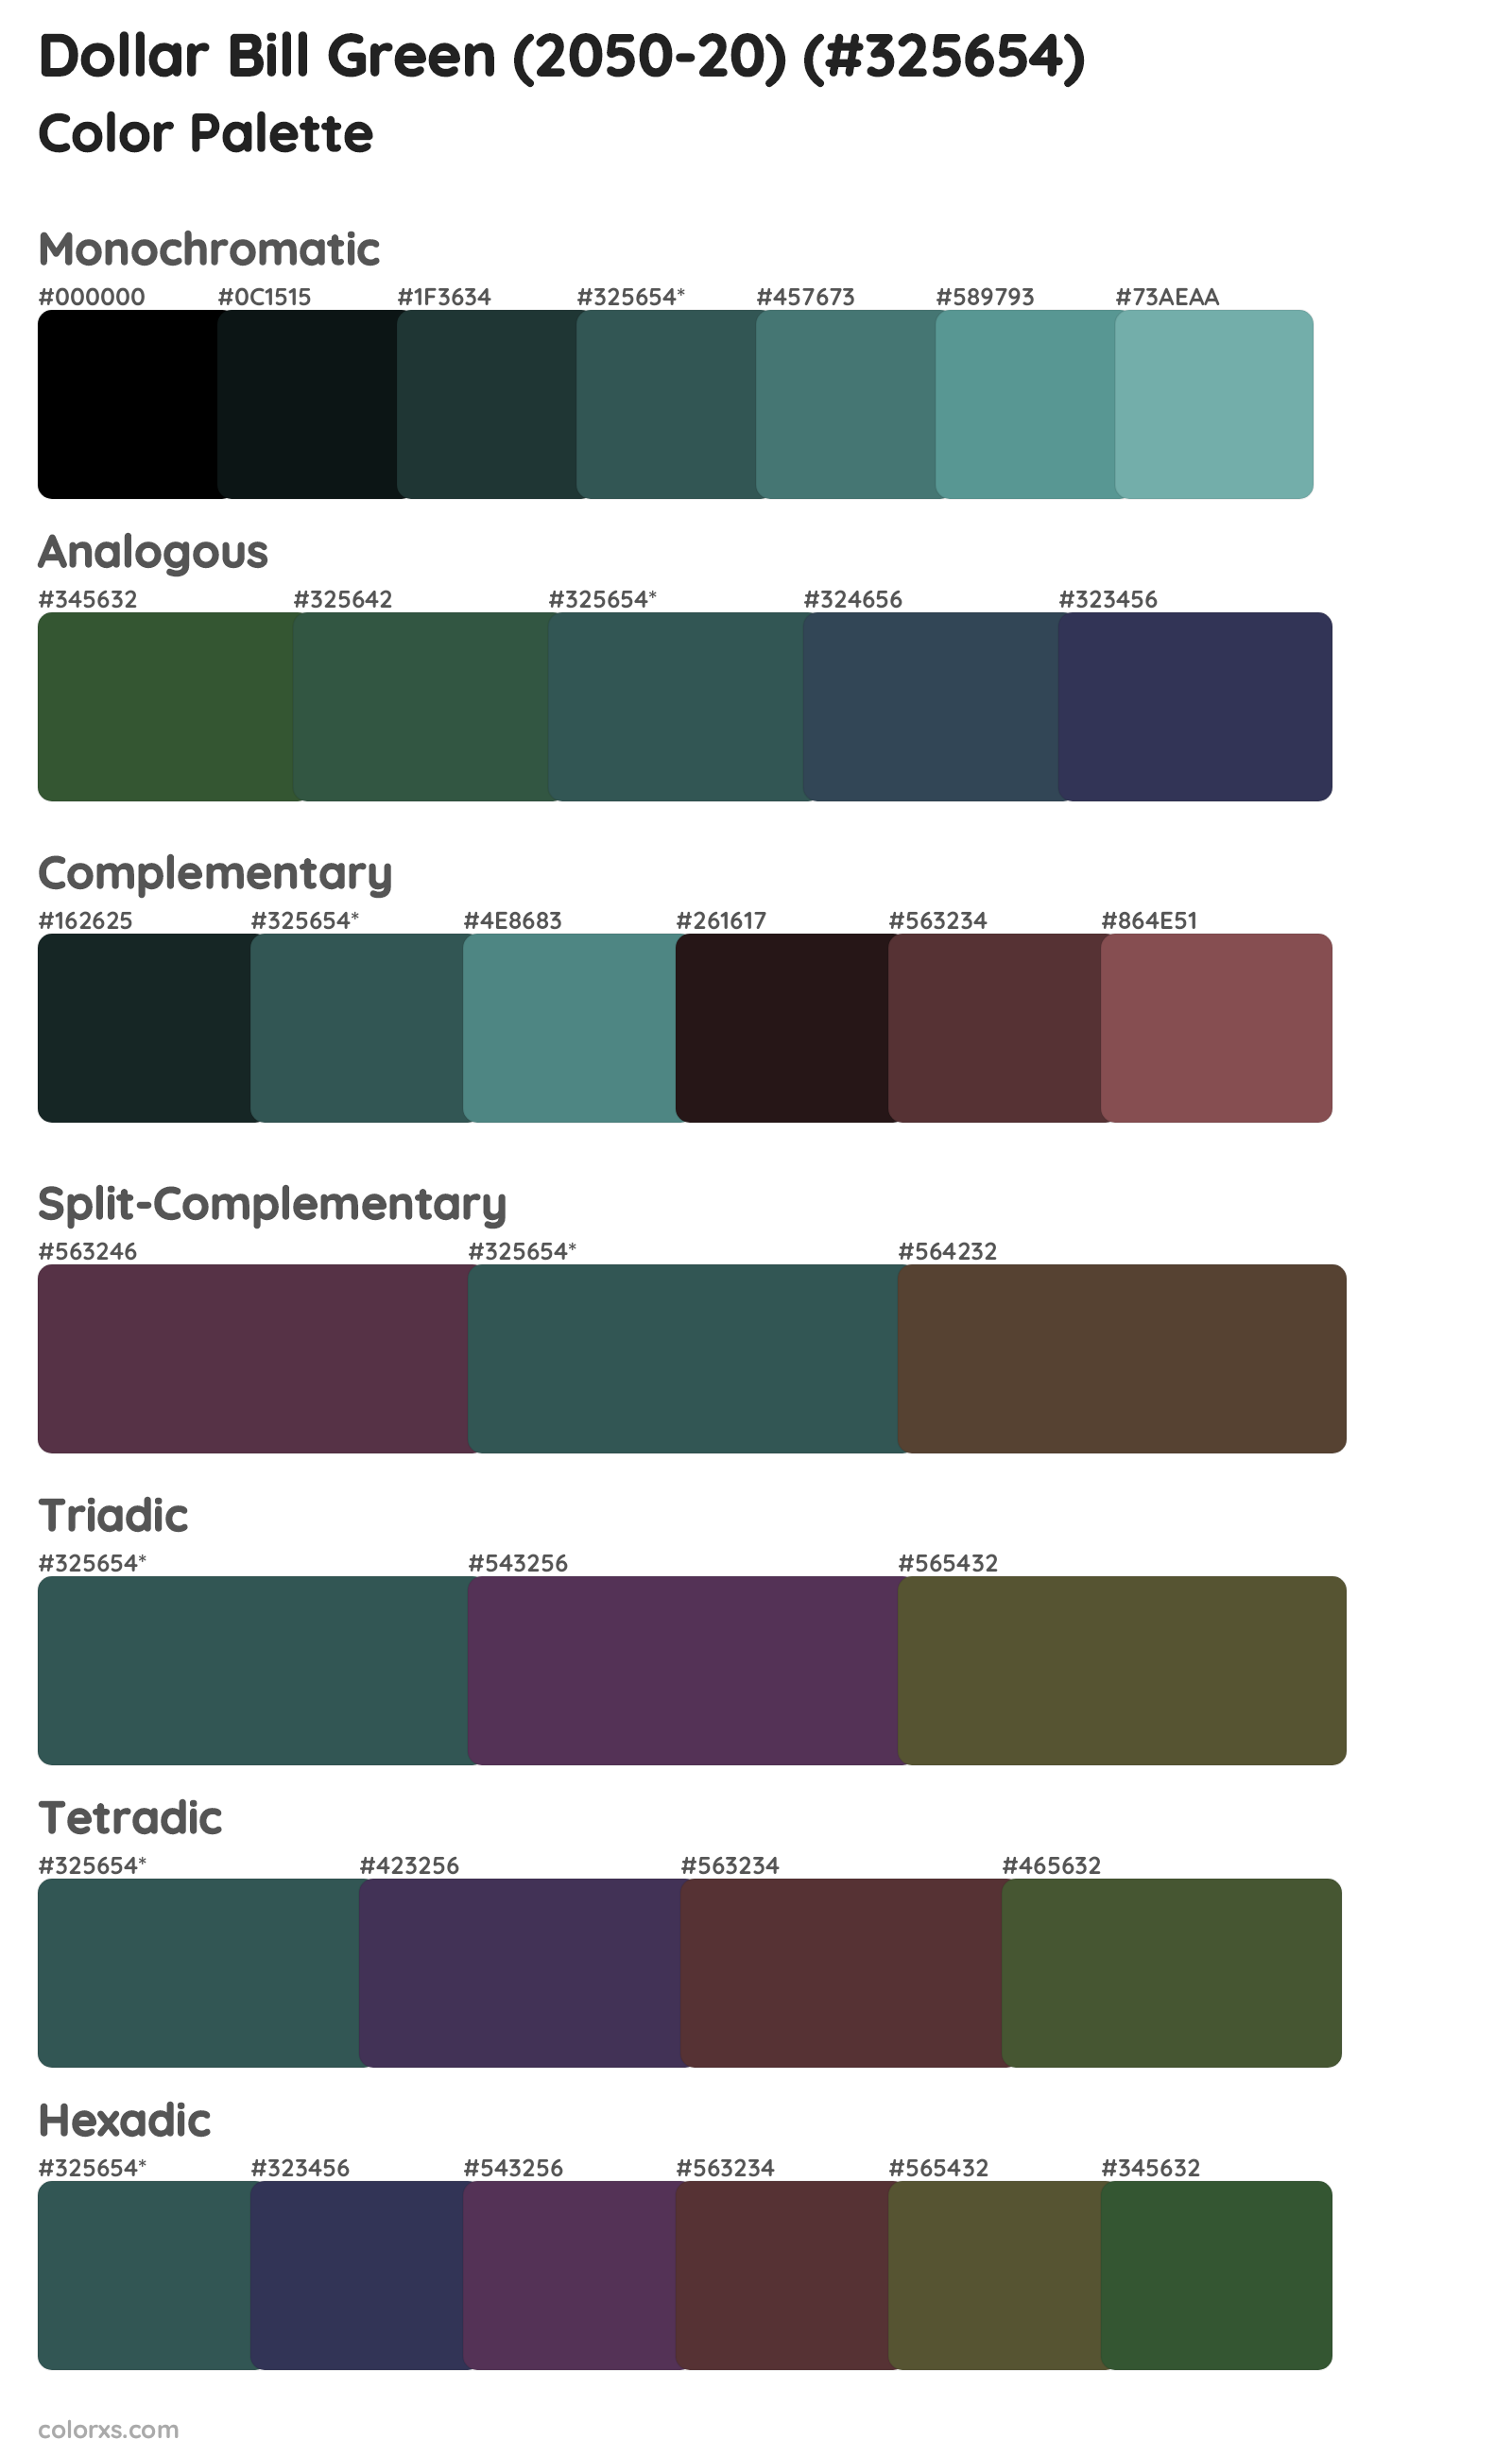 Dollar Bill Green (2050-20) Color Scheme Palettes